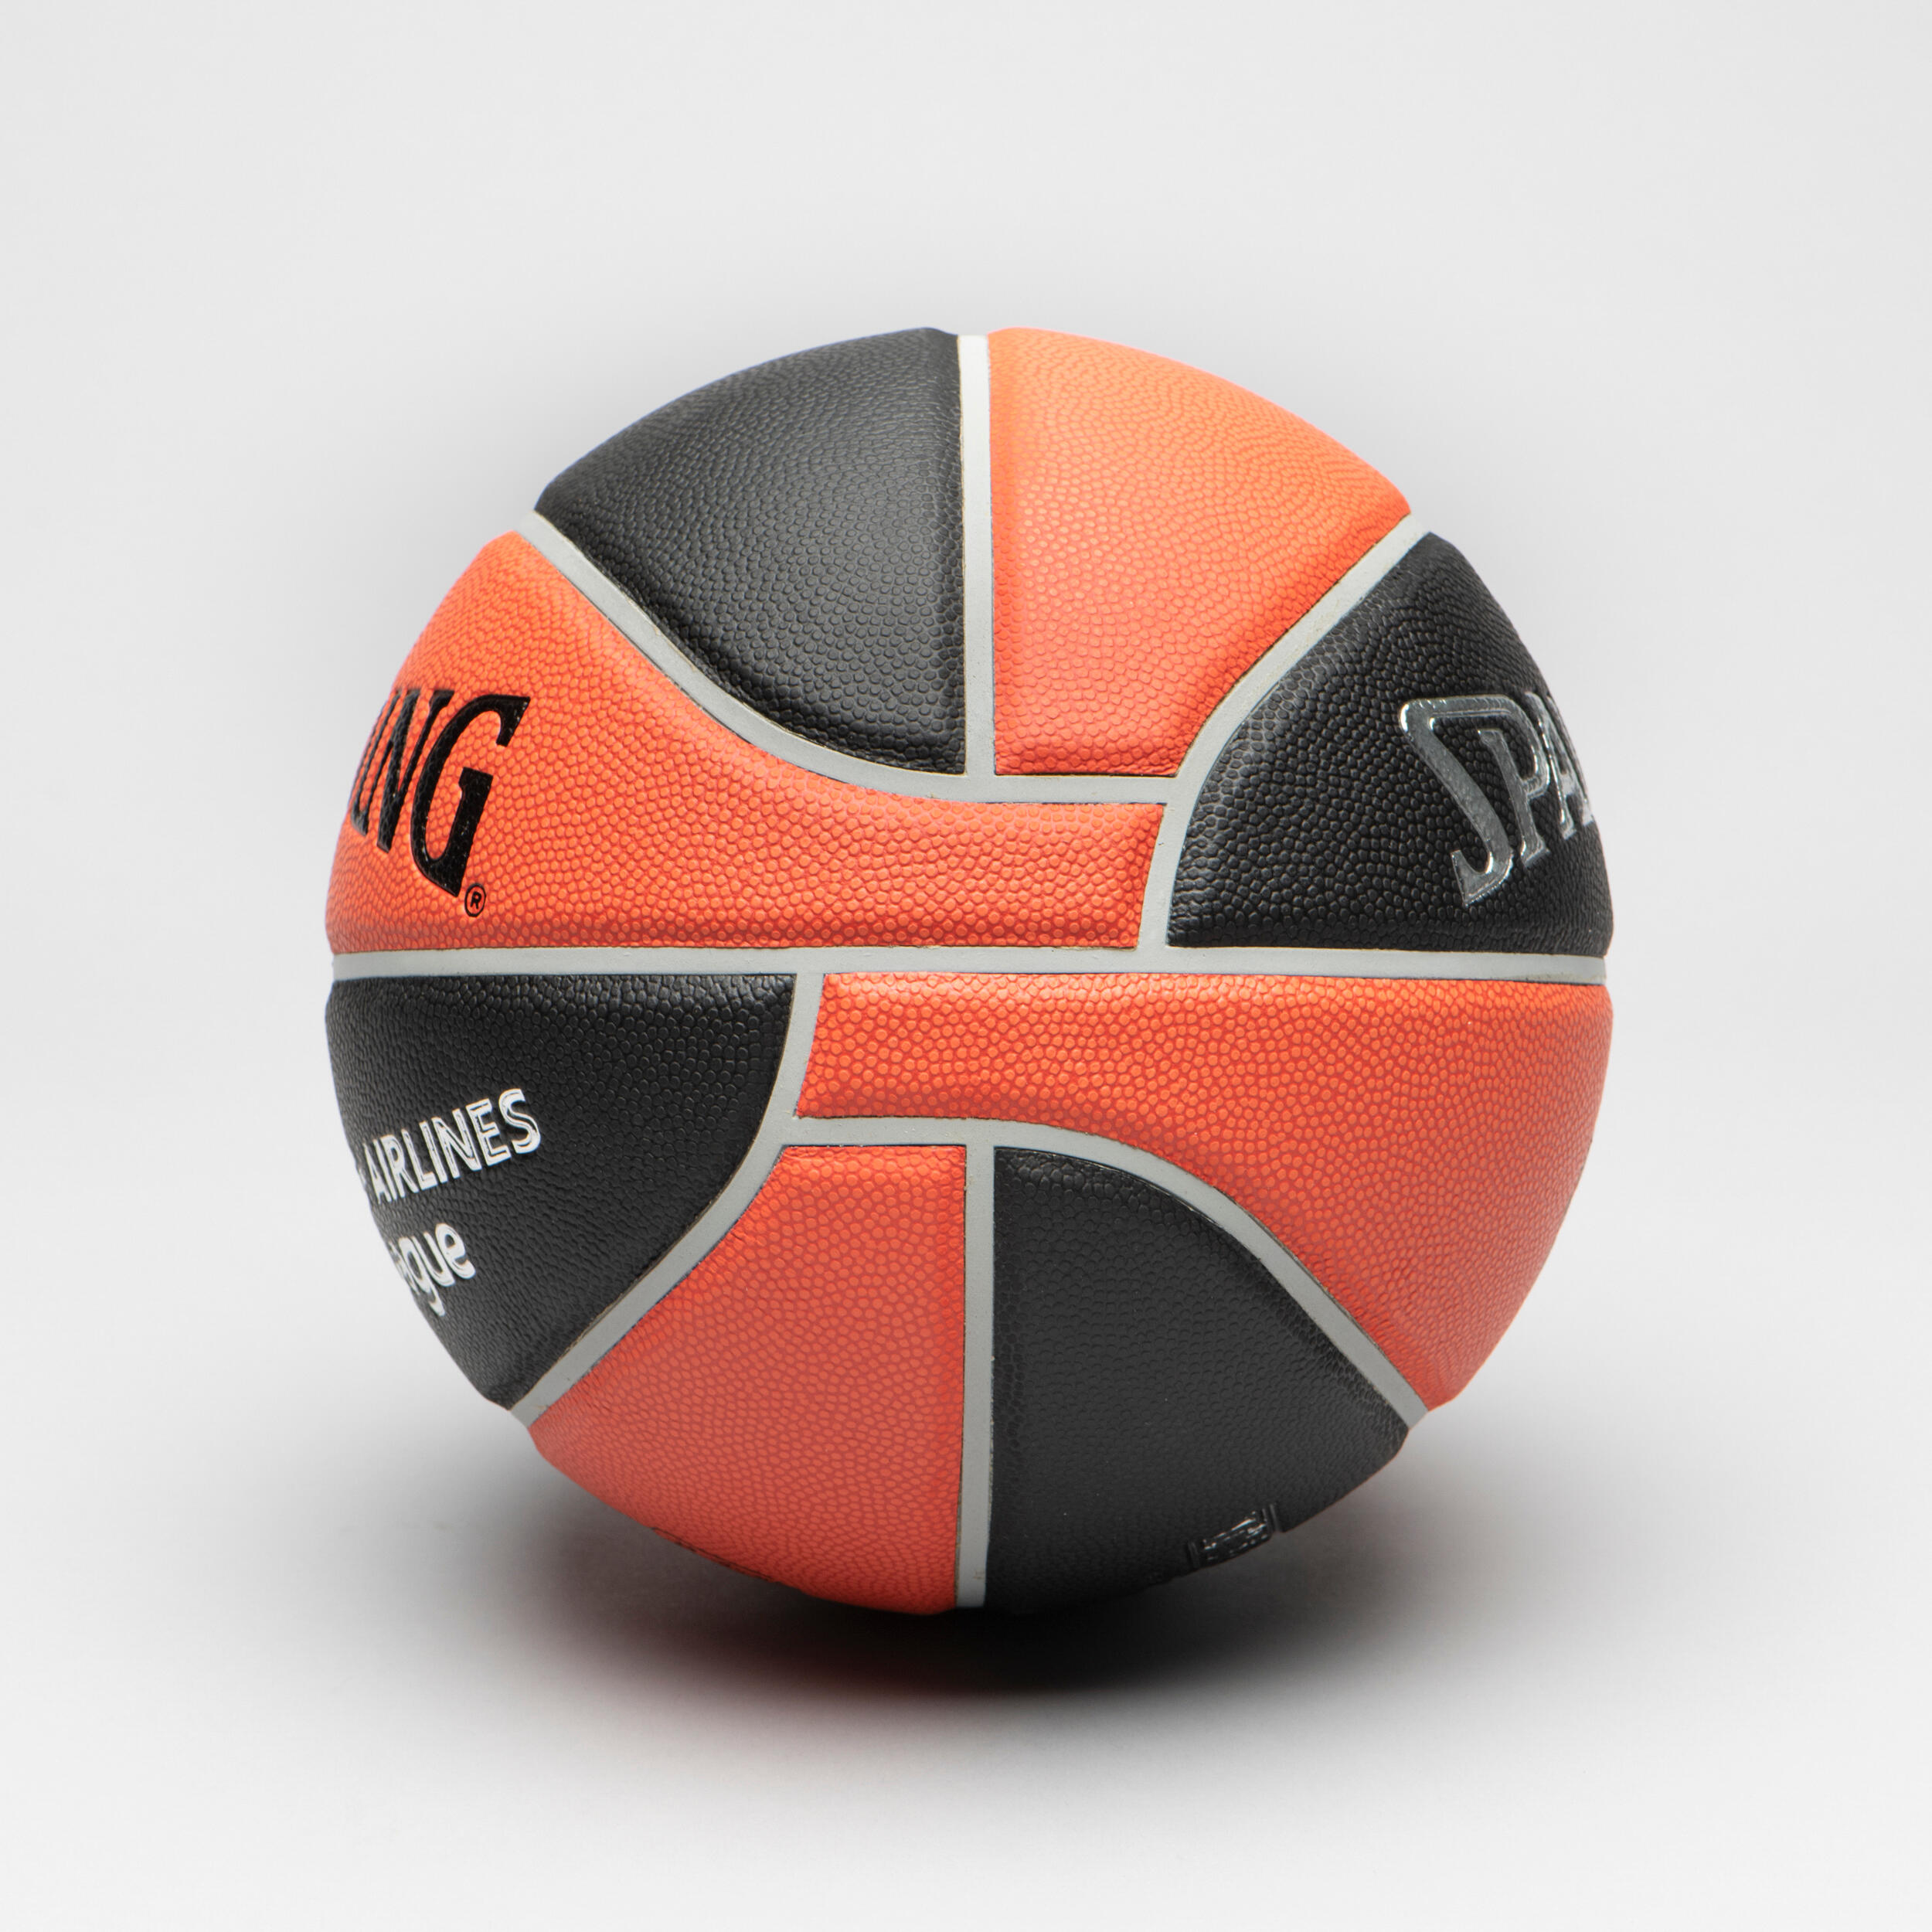 Size 7 Basketball 7 TF1000 Euroleague - Orange/Black 4/8